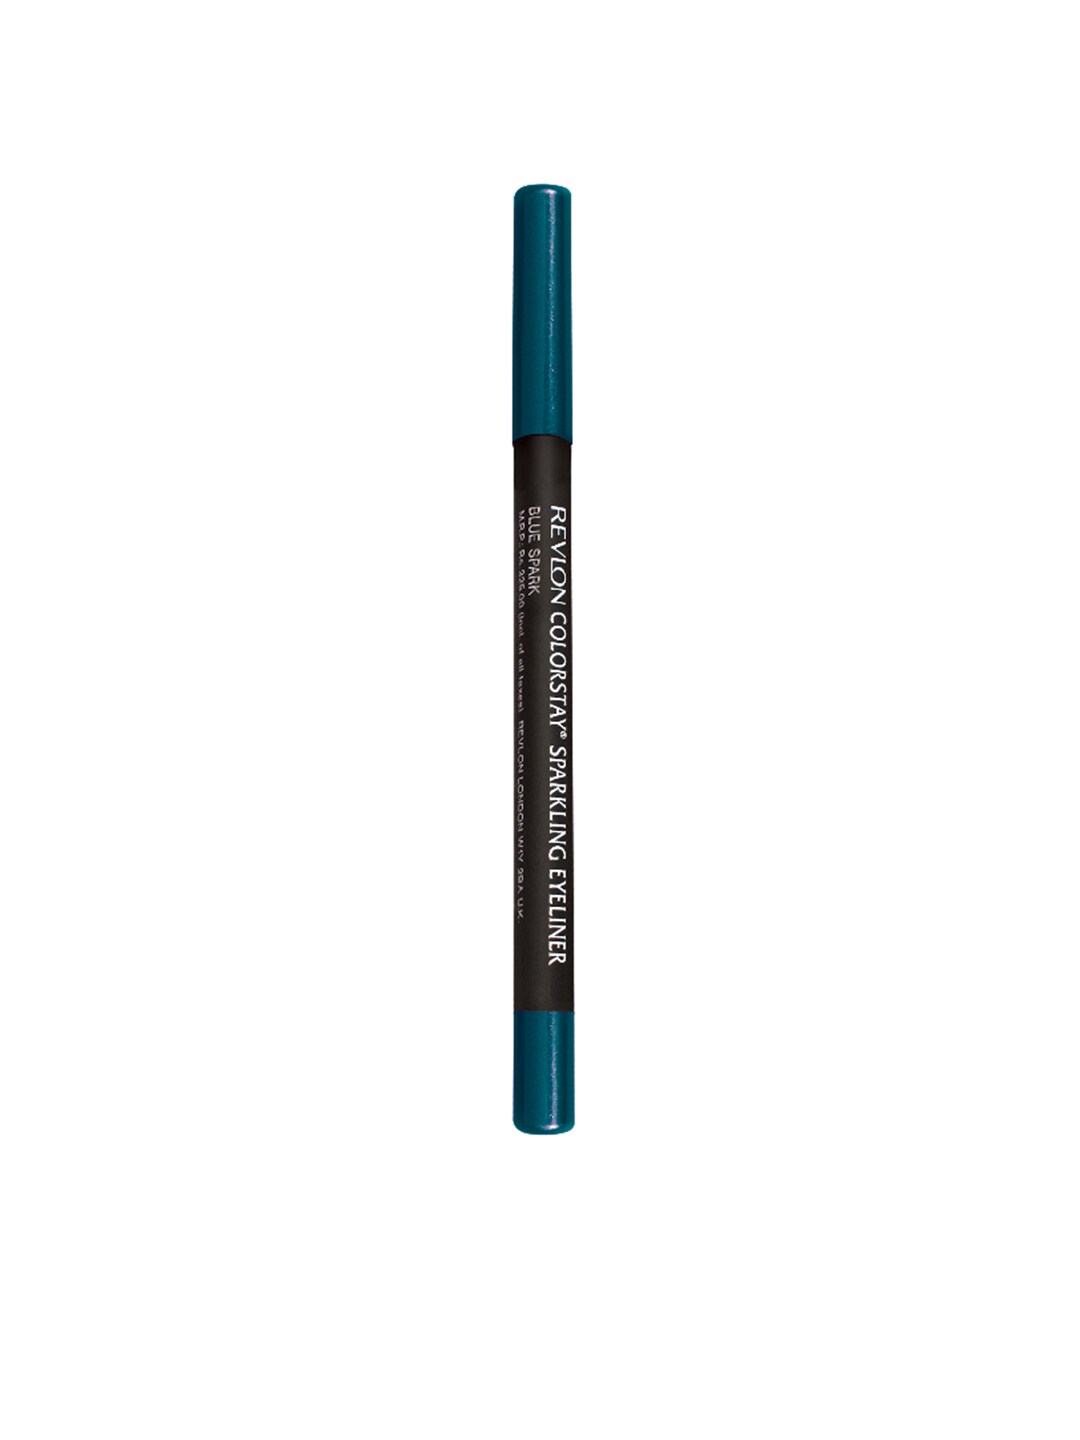 Revlon Colorstay Green Spark Eye Pencil